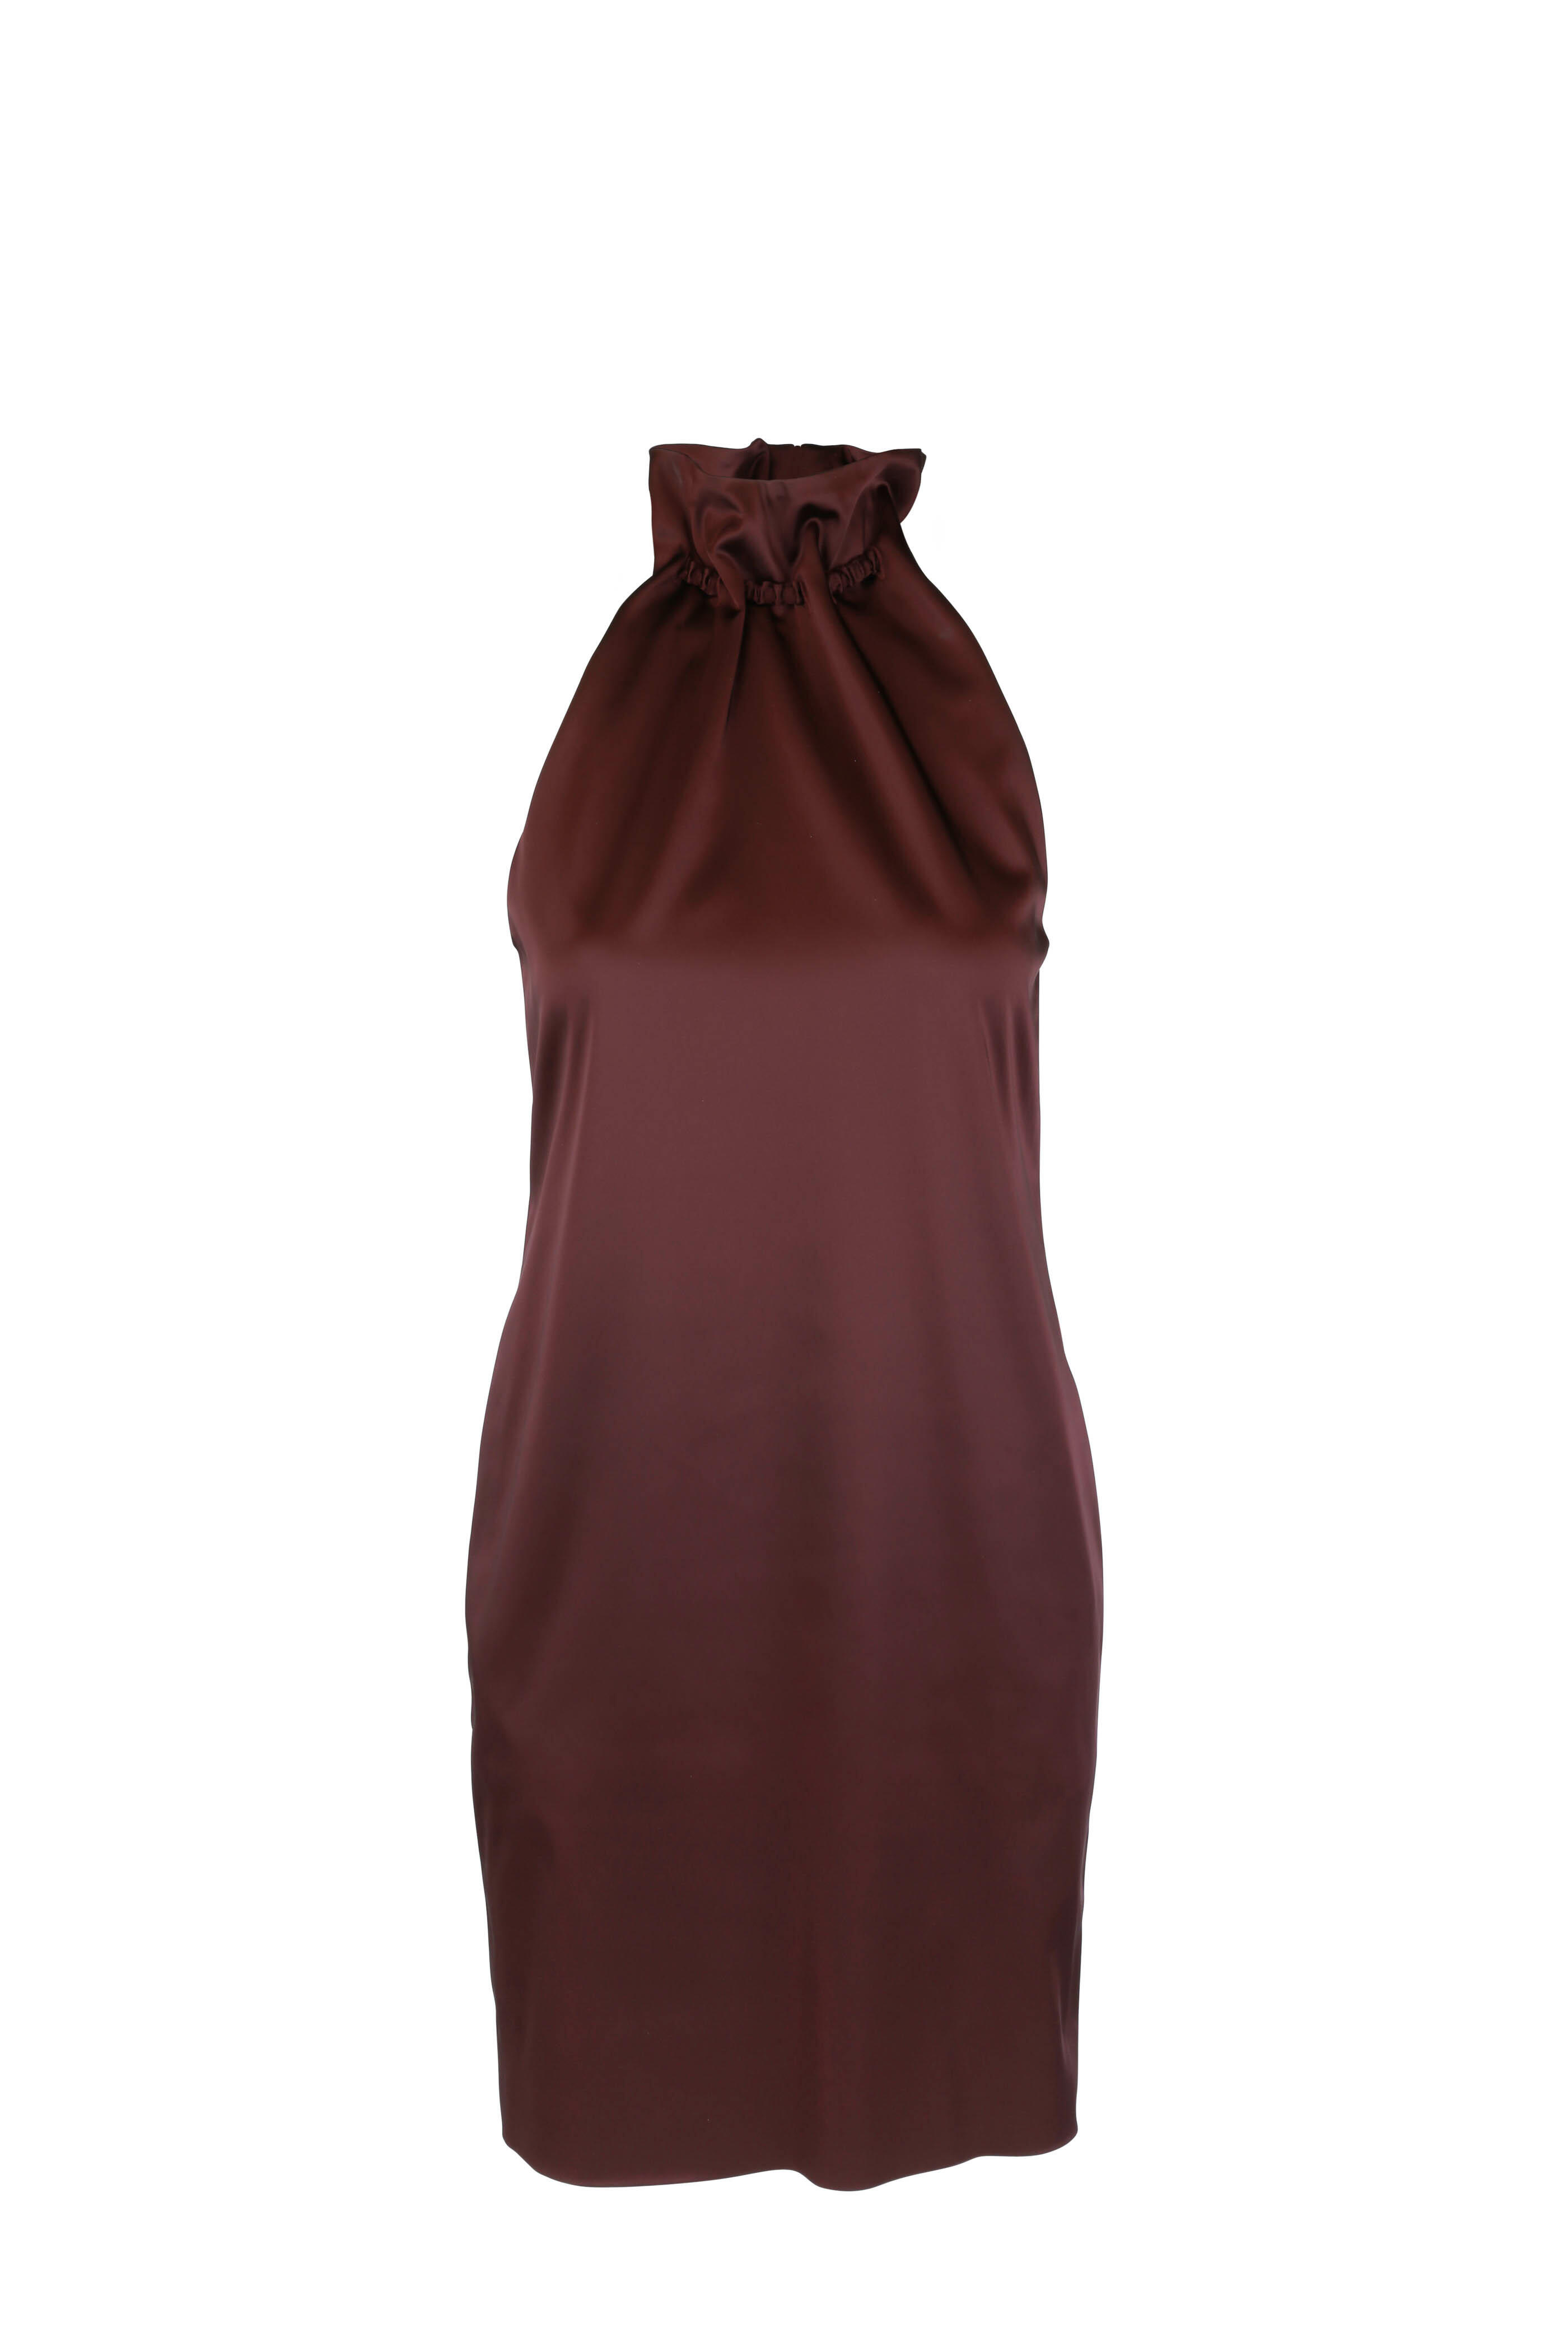 Rosetta Getty - Maroon Drawstring Neck Dress | Mitchell Stores